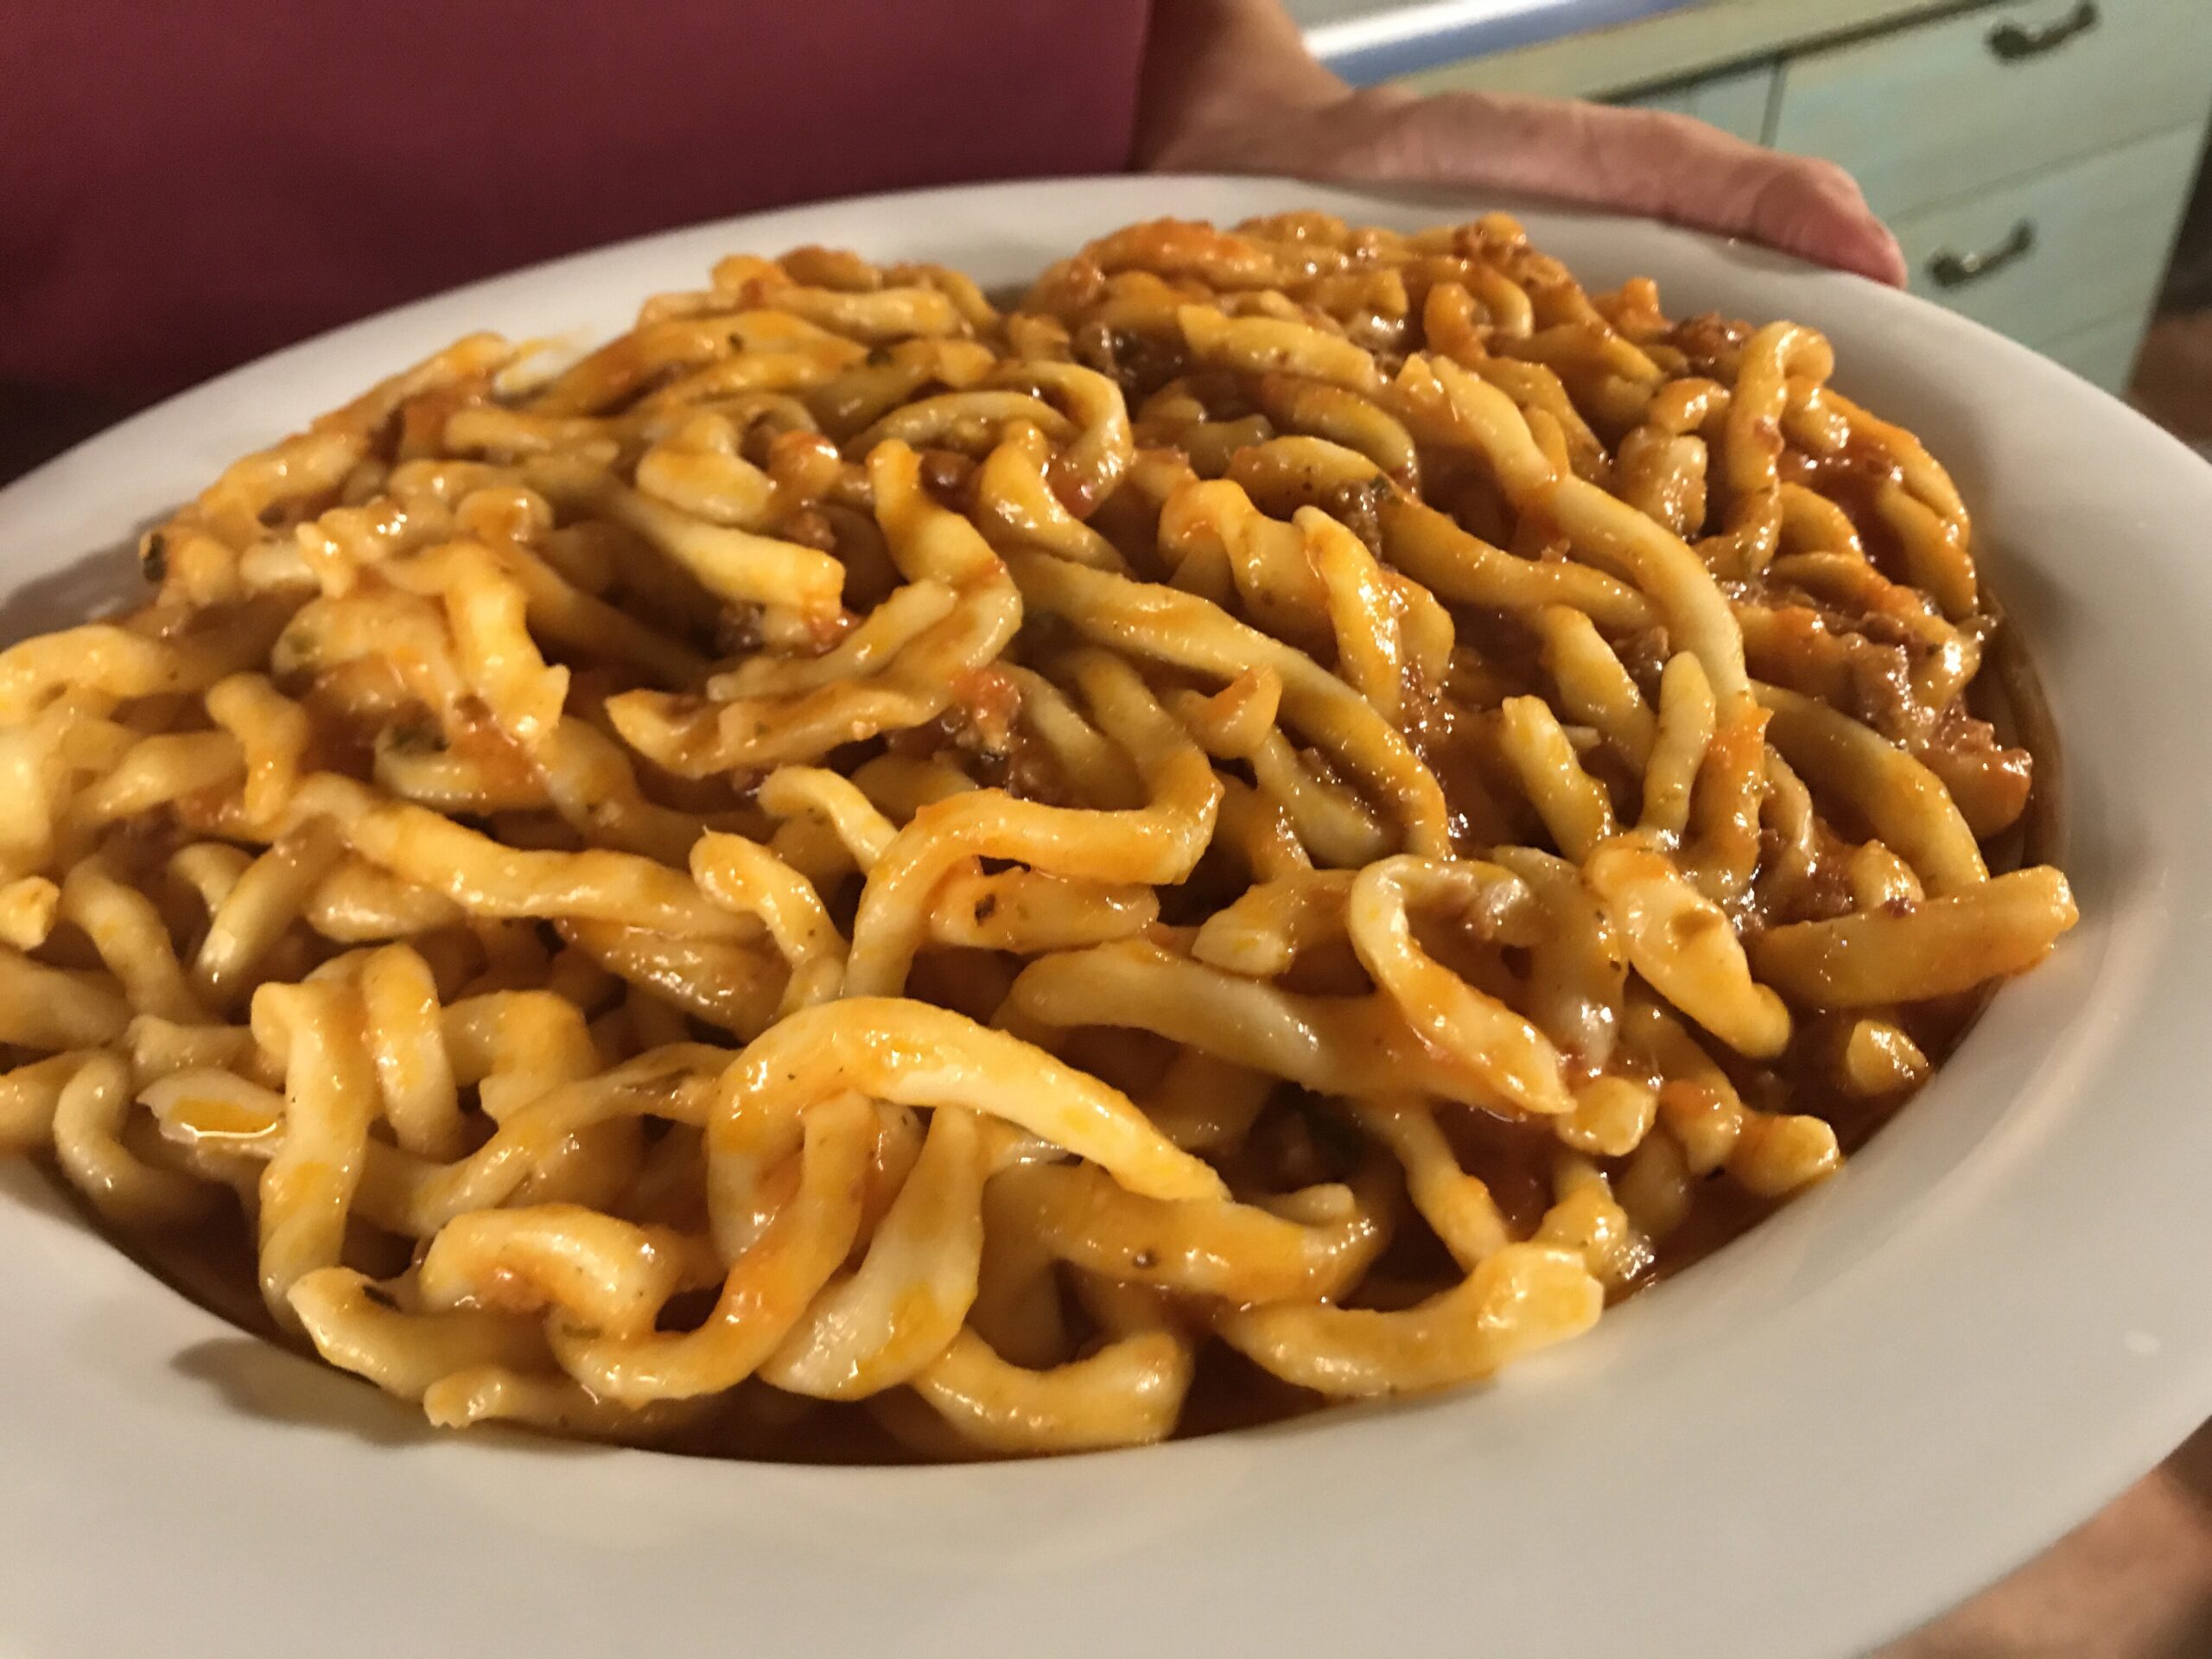 Sunday lunch in Tuscany, pici all' aglione